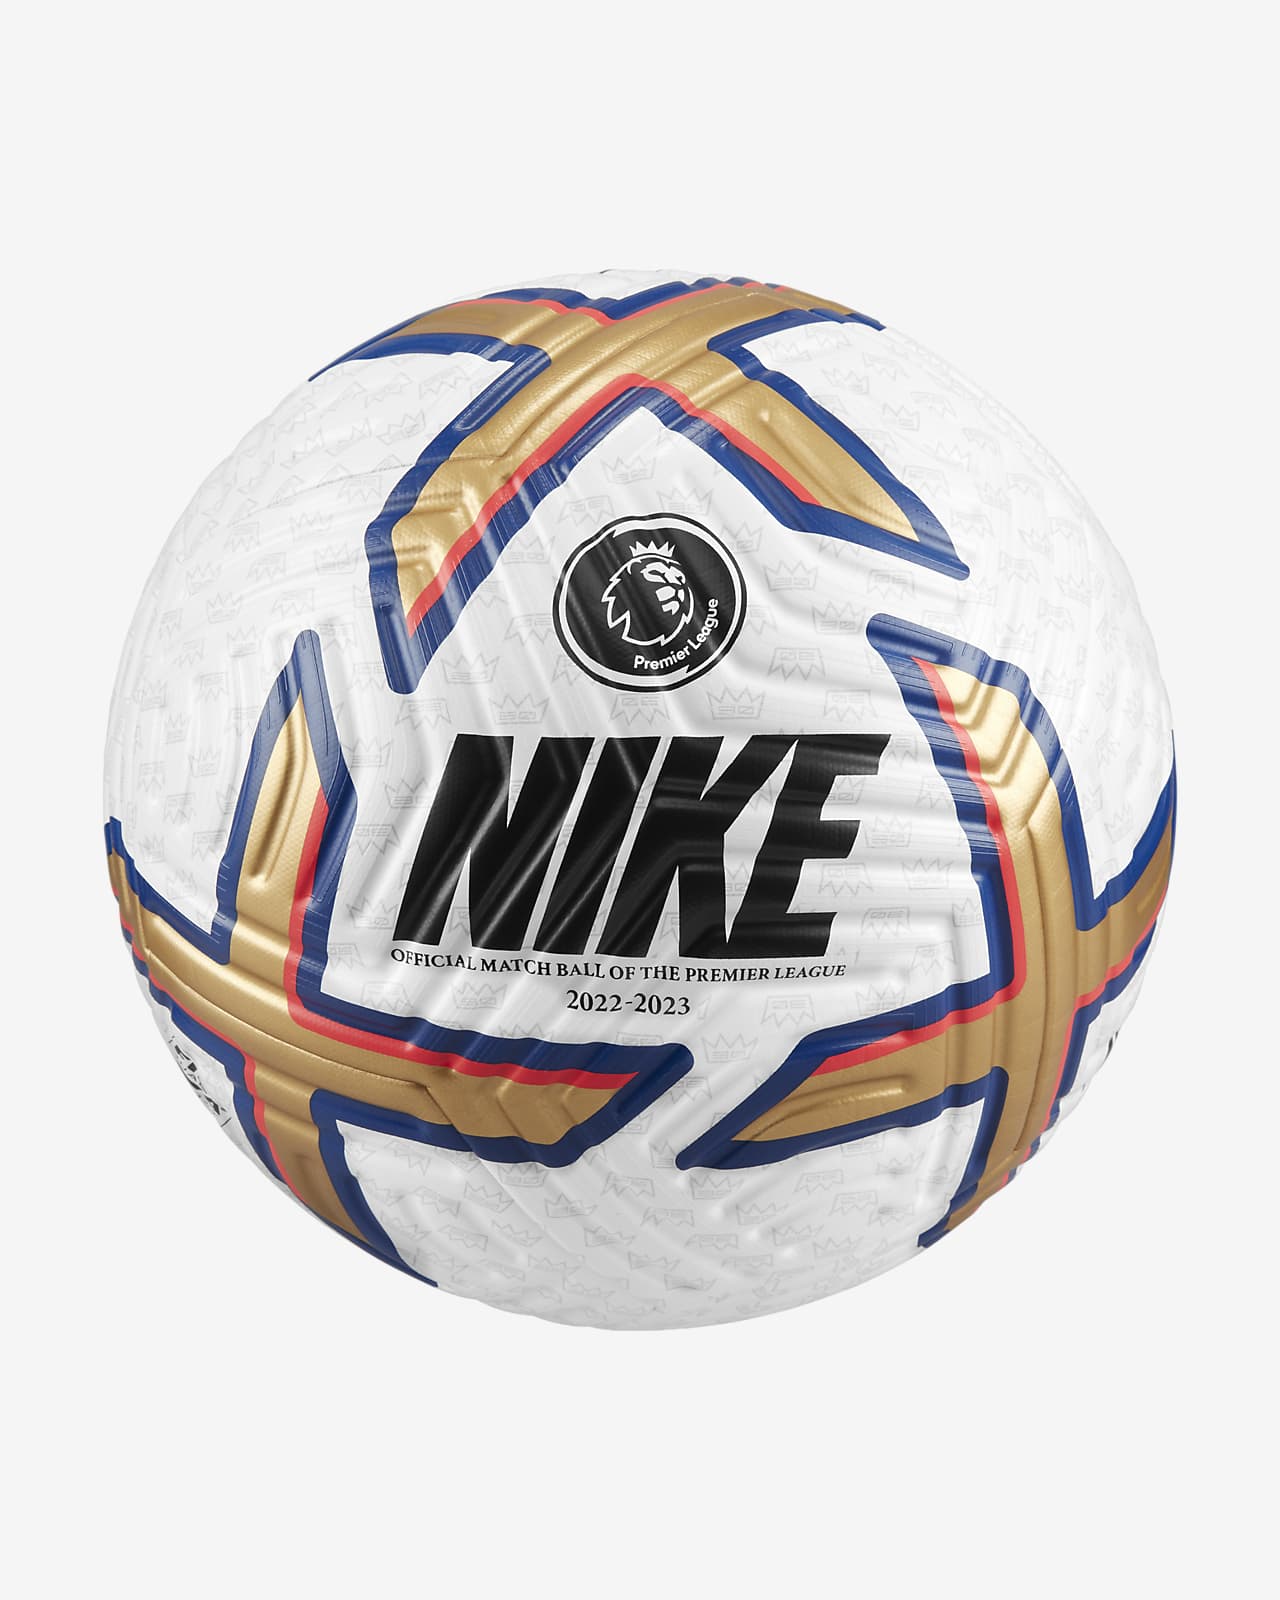 https://static.nike.com/a/images/t_PDP_1280_v1/f_auto,q_auto:eco/cdf4b410-6487-4902-86ff-18ac12d88f5f/premier-league-flight-soccer-ball-mLJ1k2.png